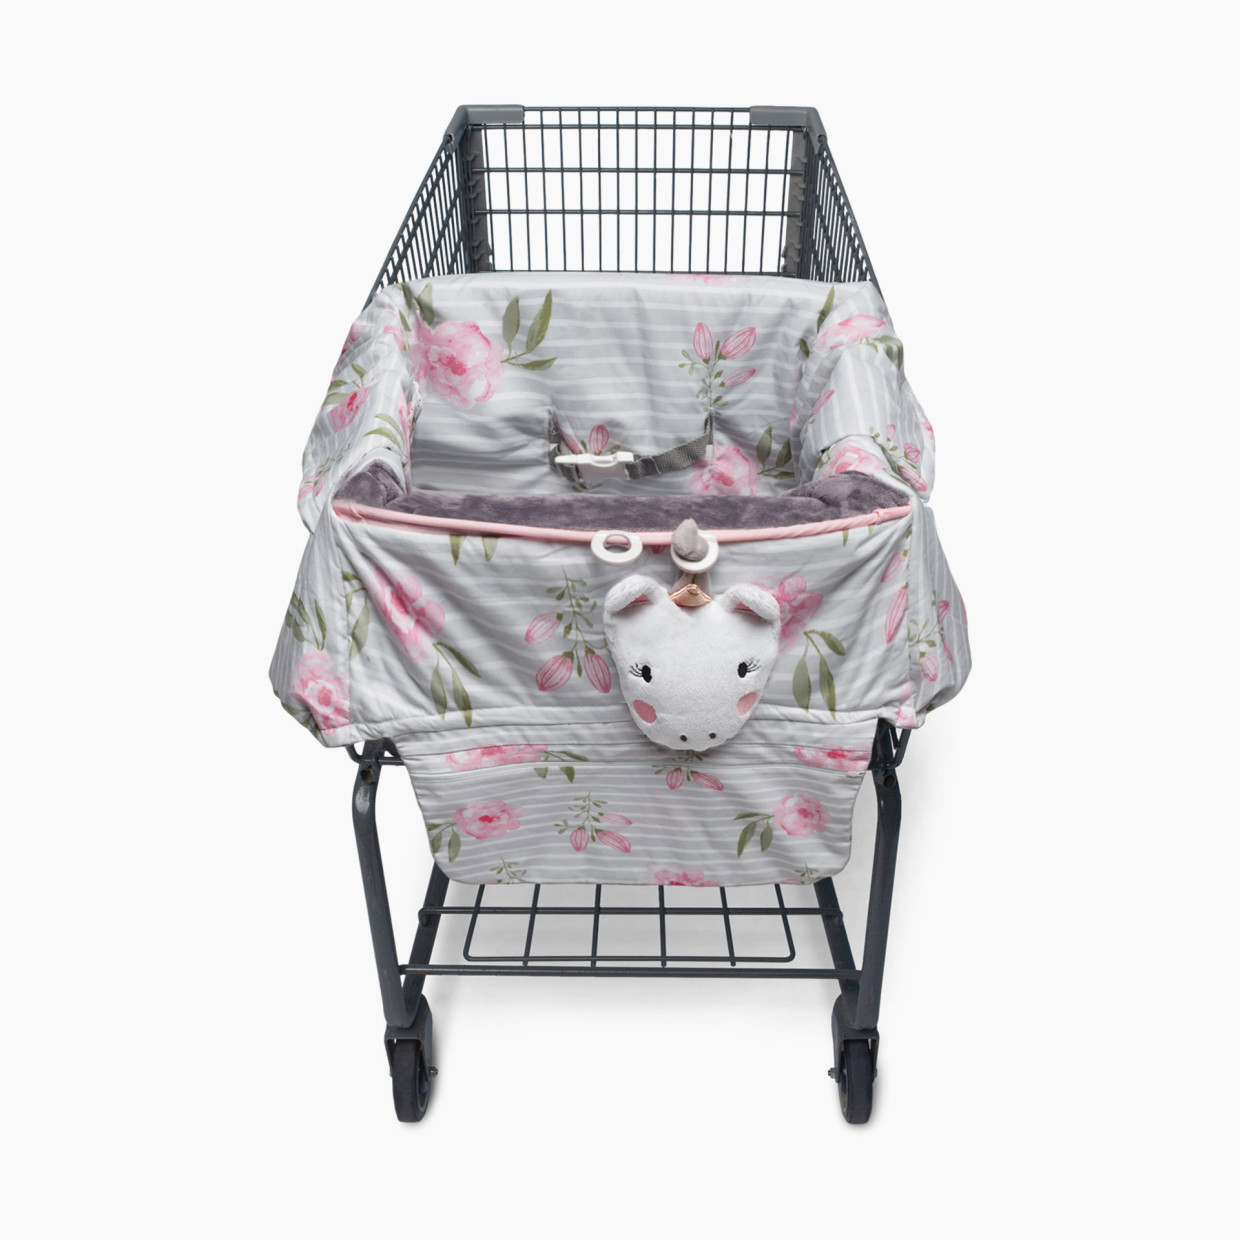 Boppy Preferred Shopping Cart Cover - Pink Unicorn.